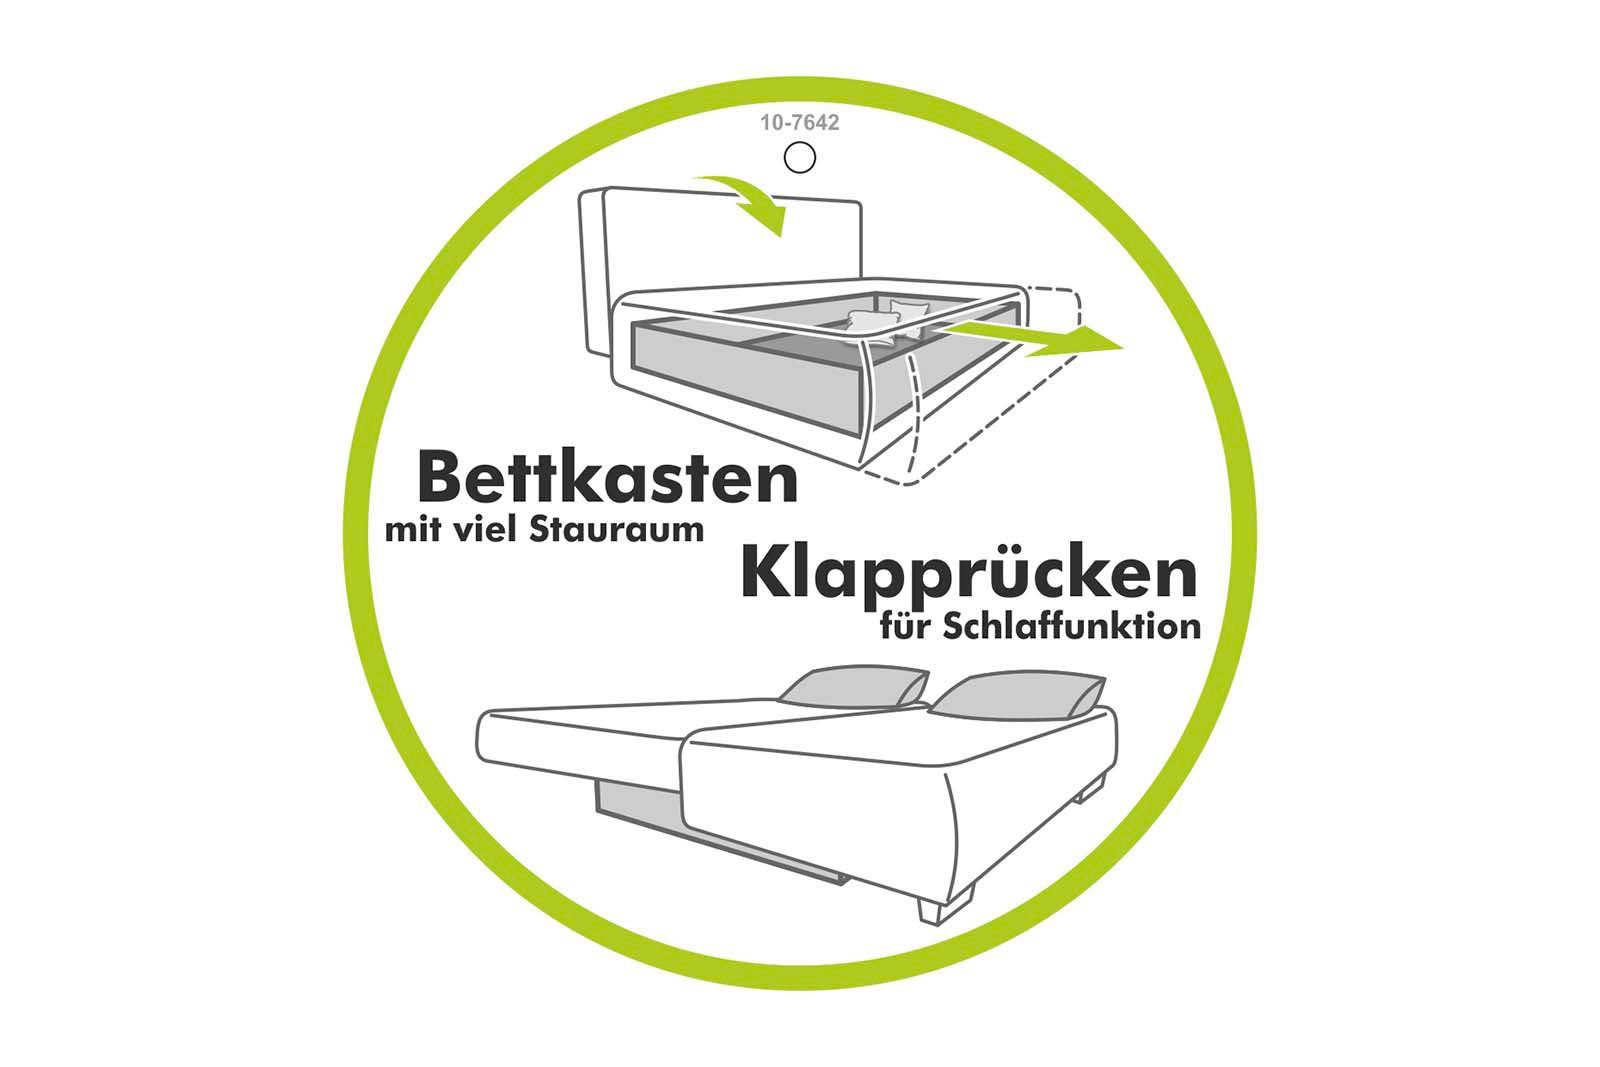 Jockenhöfer Gruppe Ecksofa Heidelberg, inklusive rechts Bettfunktion, mane links Bettkasten, oder